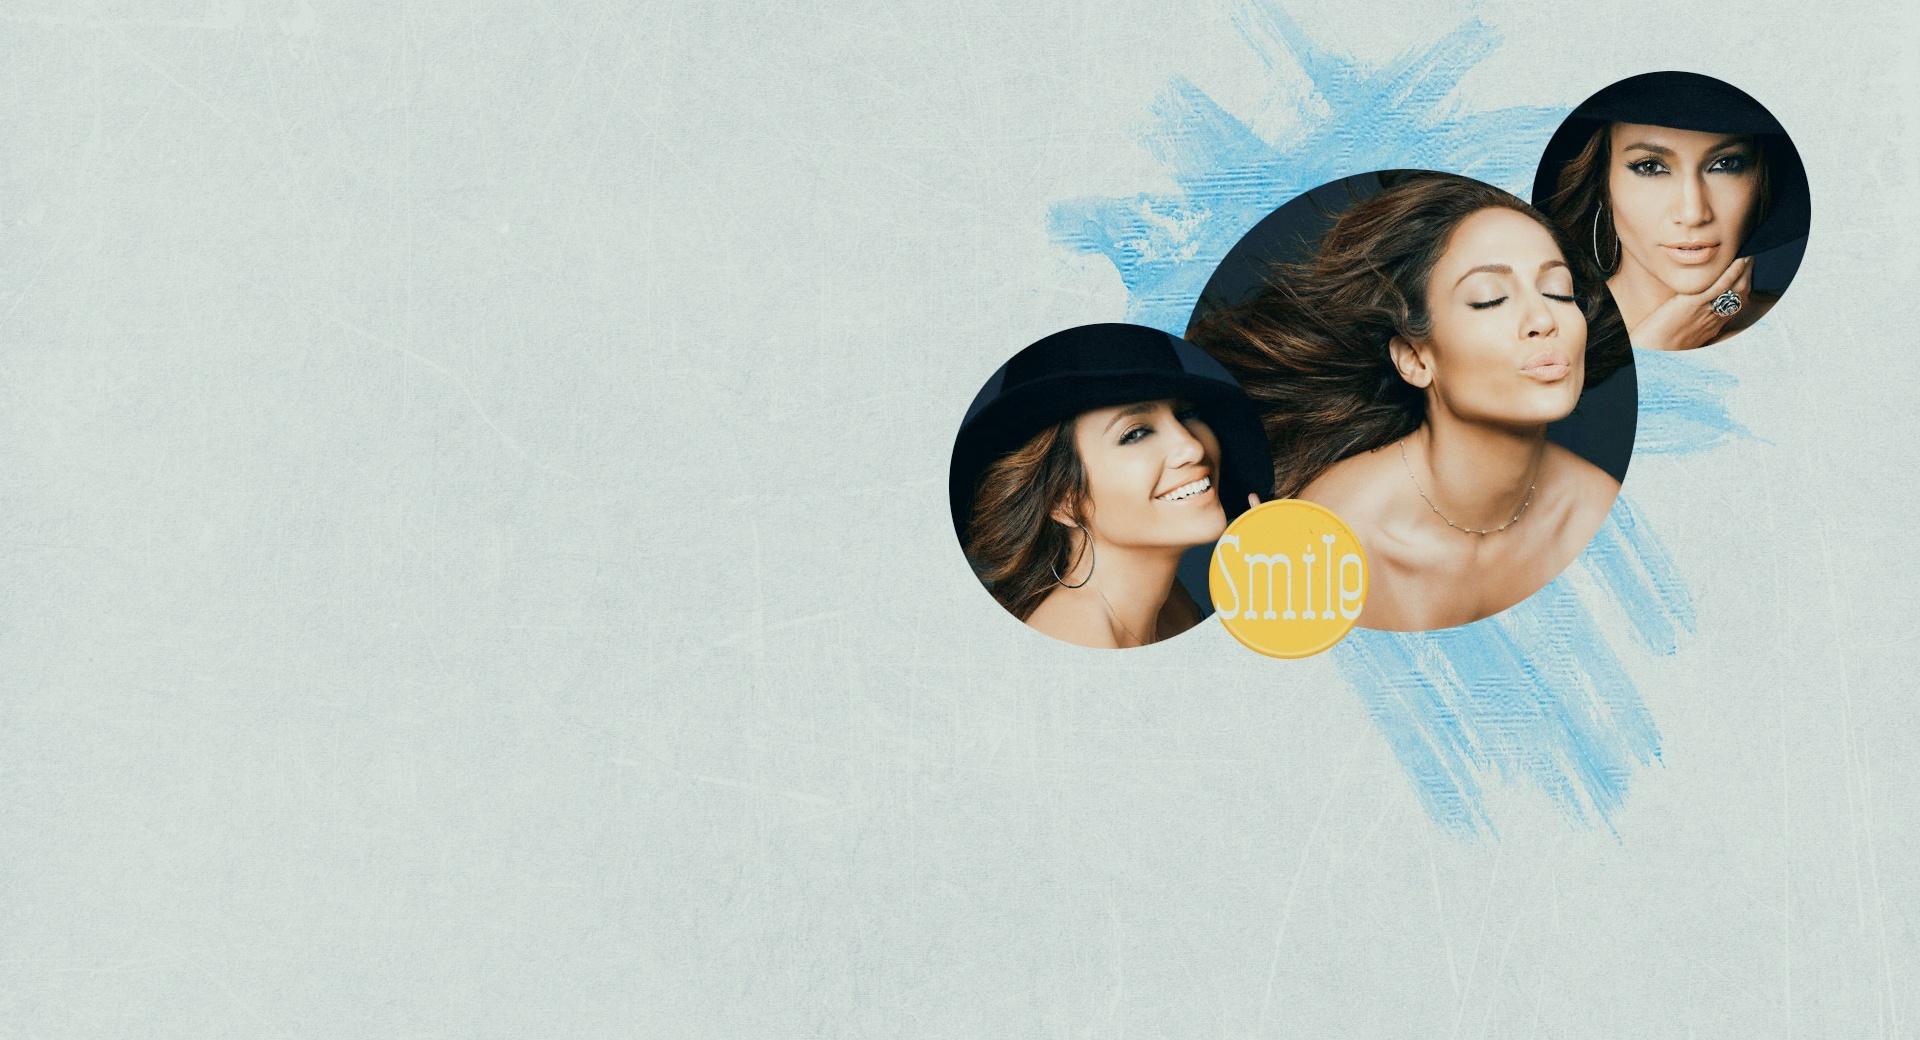 Jennifer Lopez Smile at 1024 x 768 size wallpapers HD quality